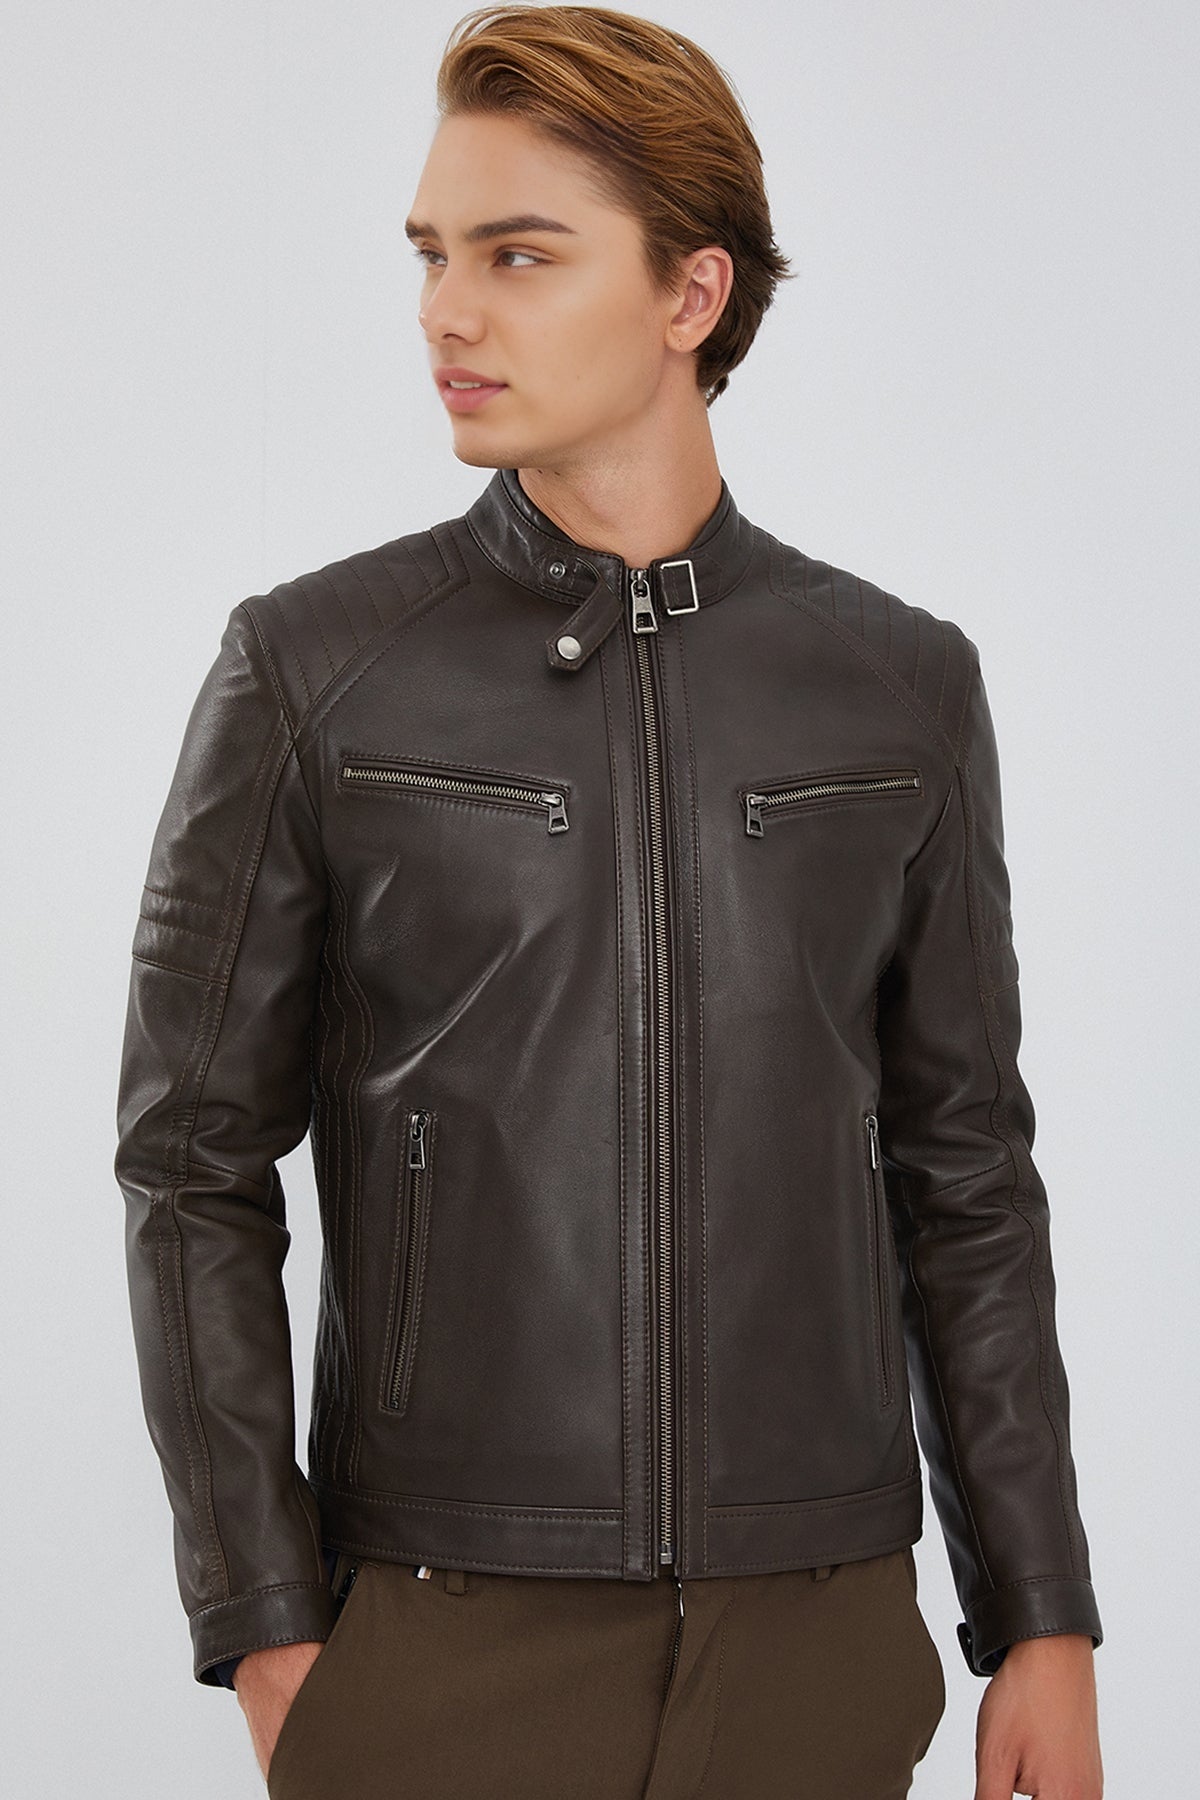 Paul Men's Brown Leather Jacket